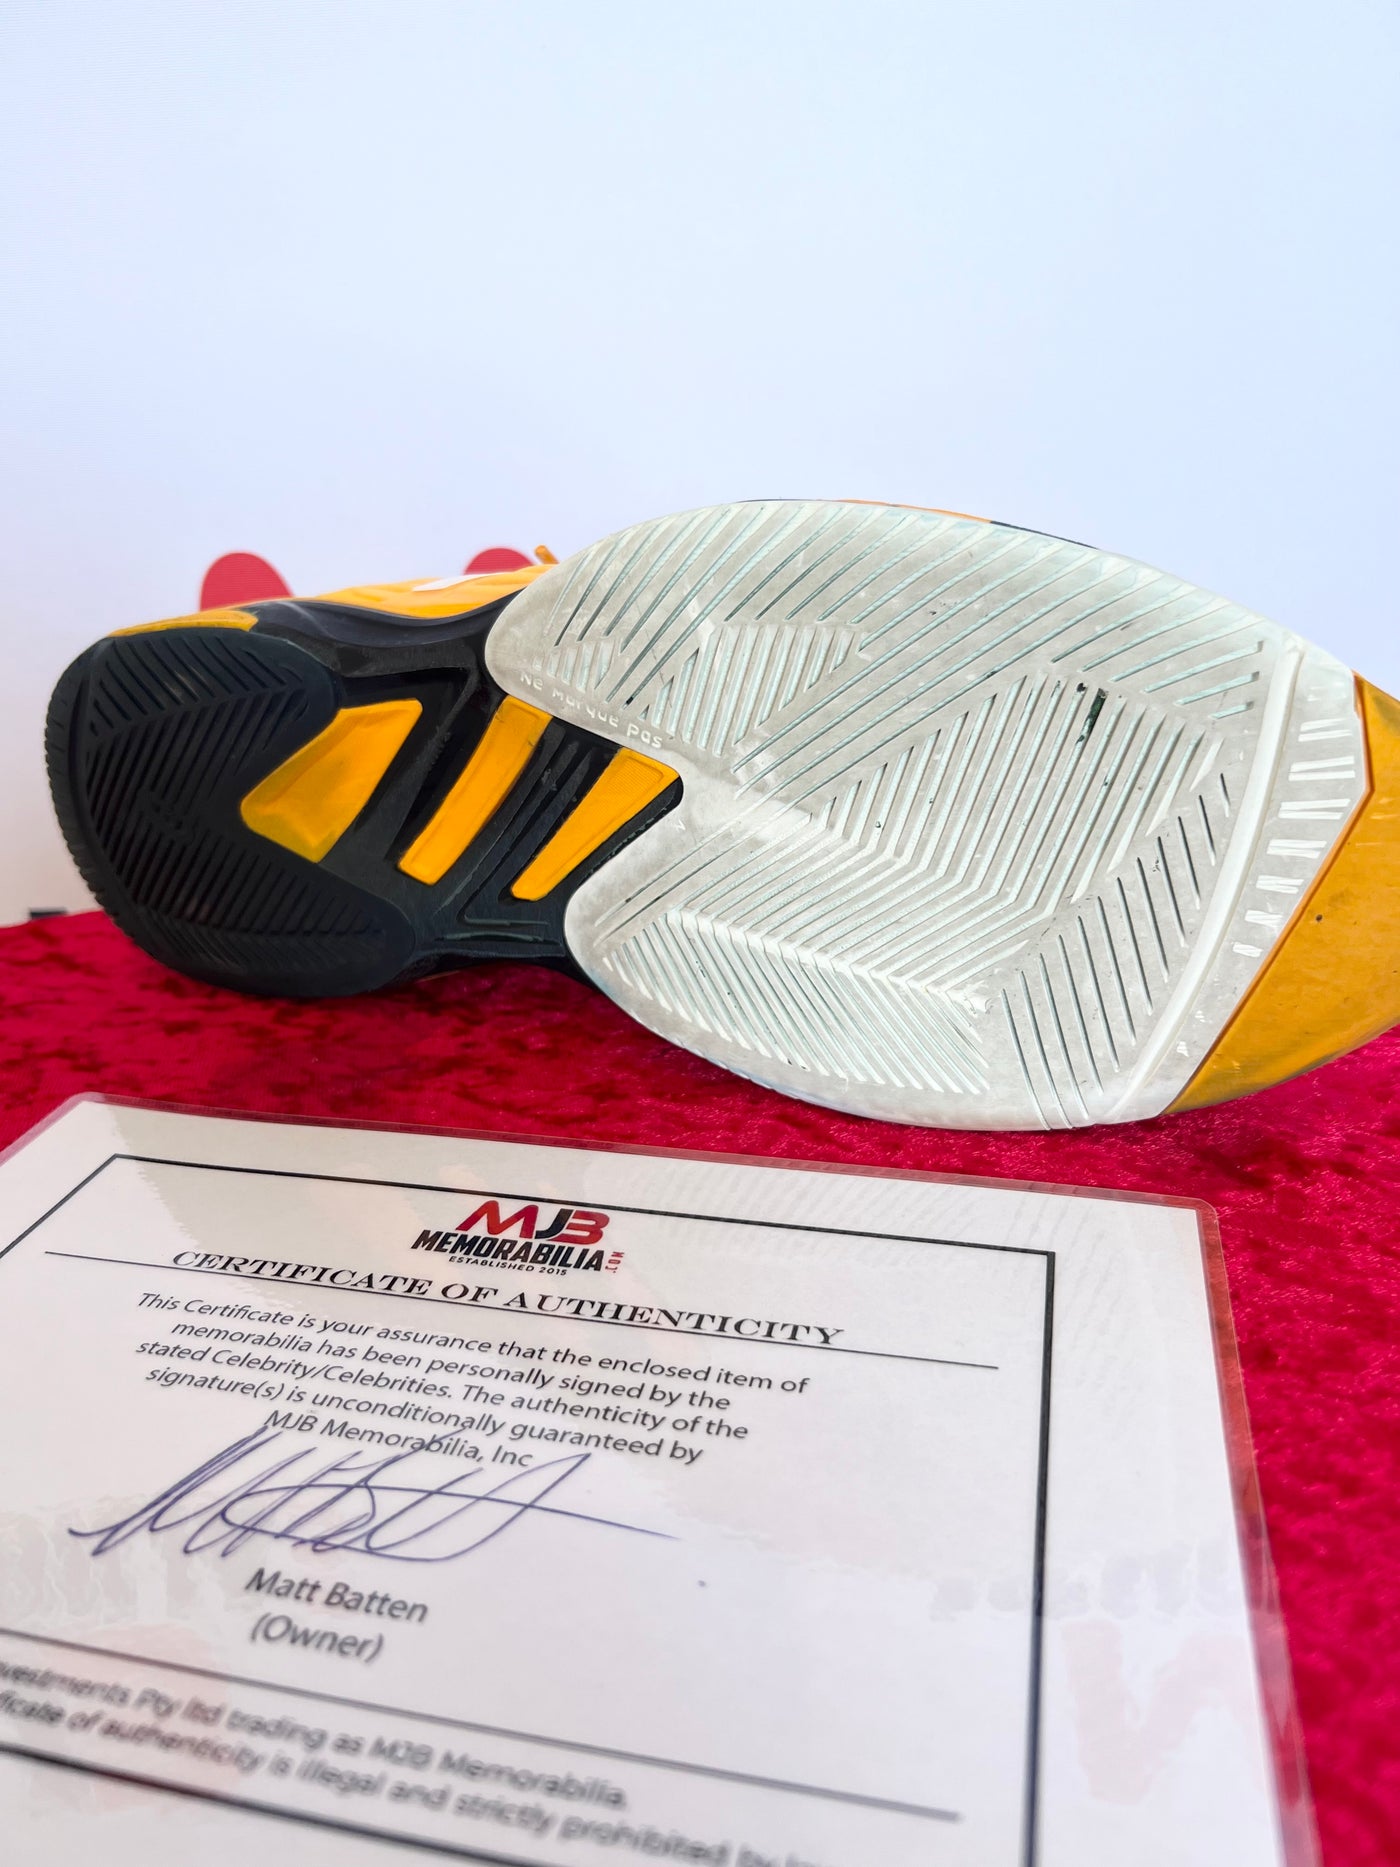 Alex de Minaur 2021 Australian Open Match Worn Asic Shoes